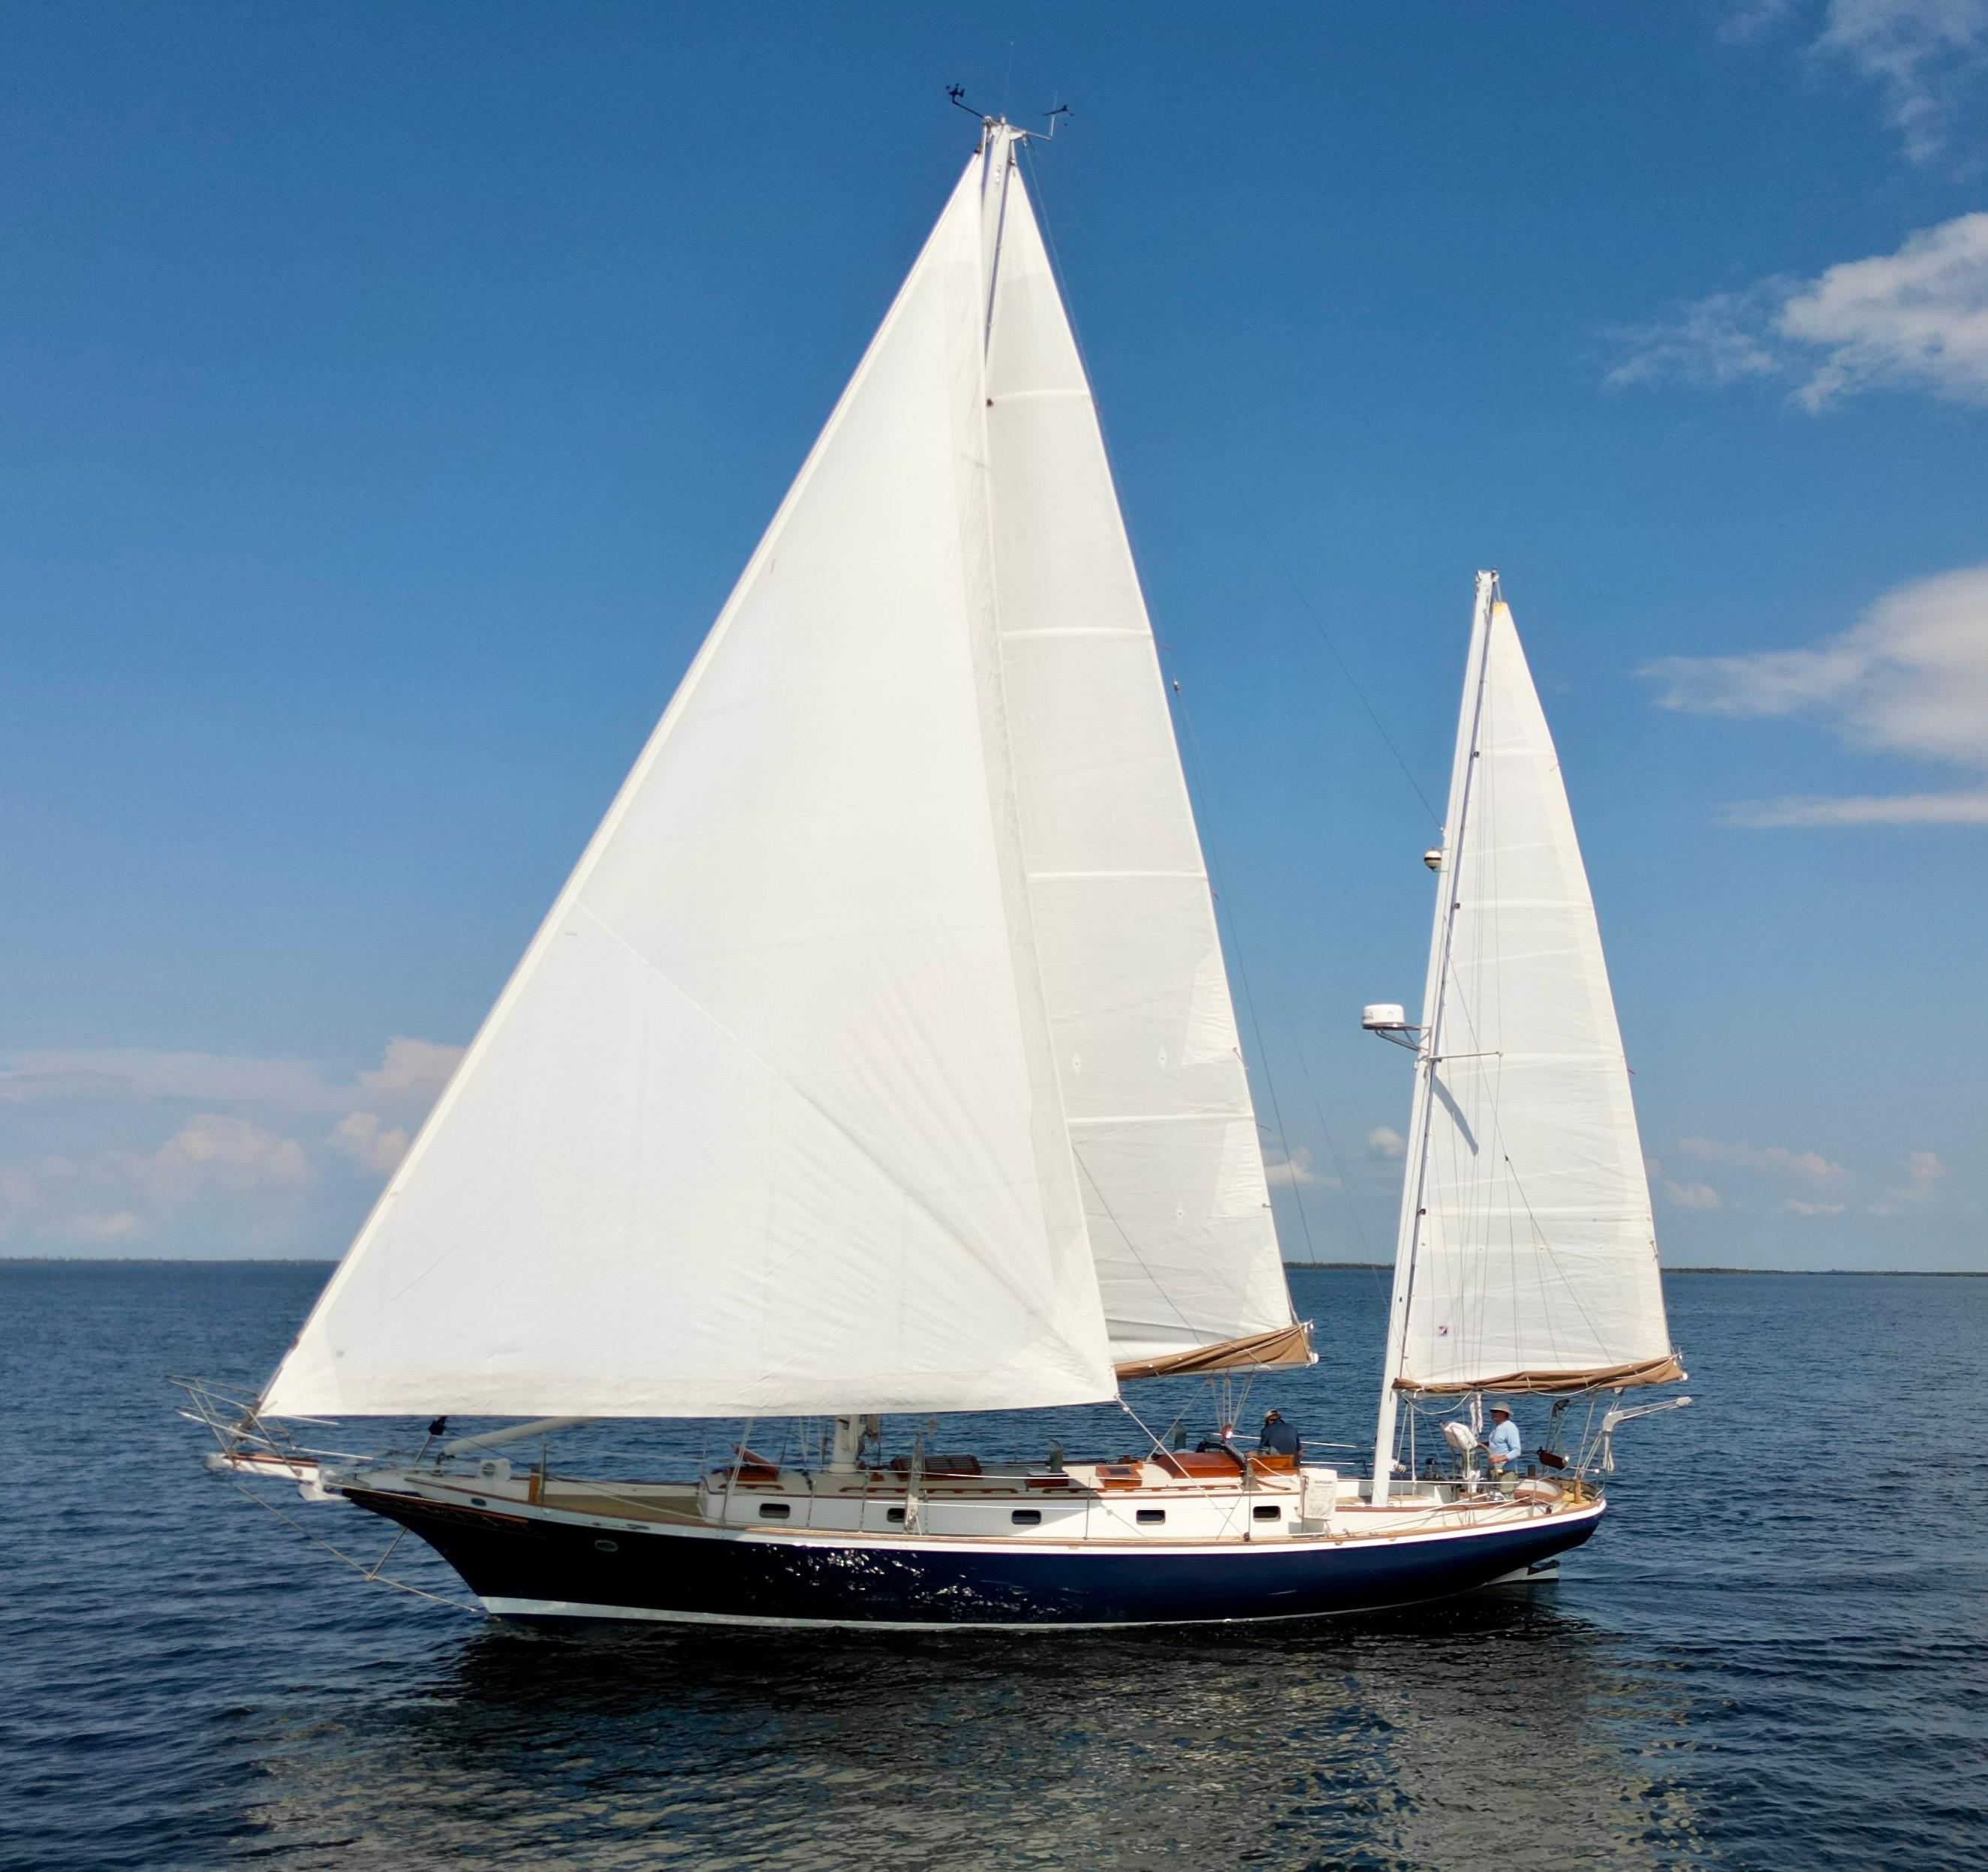 2018 Hanse 548 54' Yacht For Sale, CATALYST